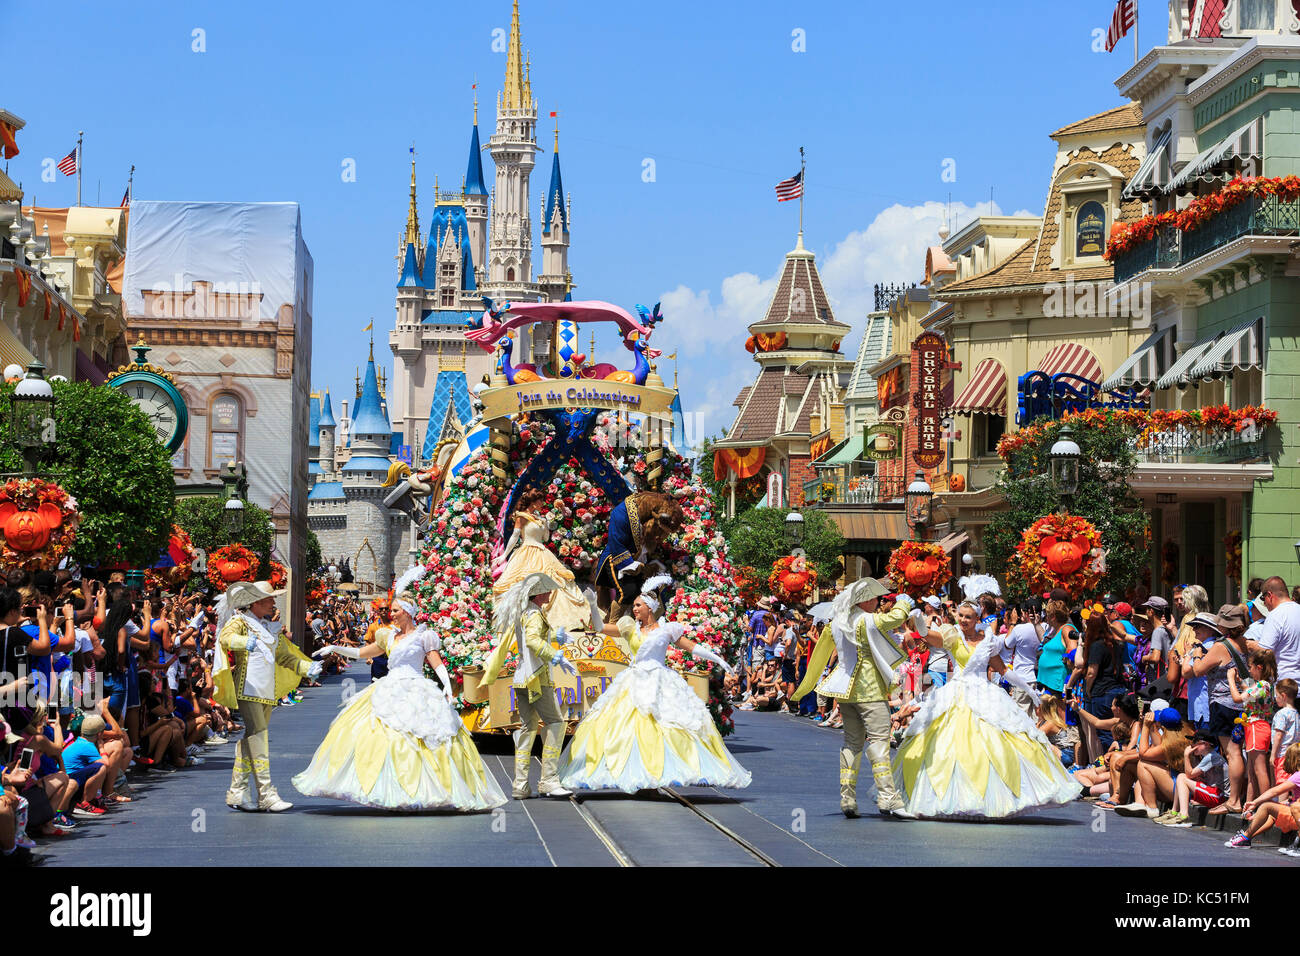 Walt Disney's Magic Kingdom theme park, showing the fairytale castle, Orlando, Florida, USA and the fairytale parade 'Carnival of Fantasy' Stock Photo